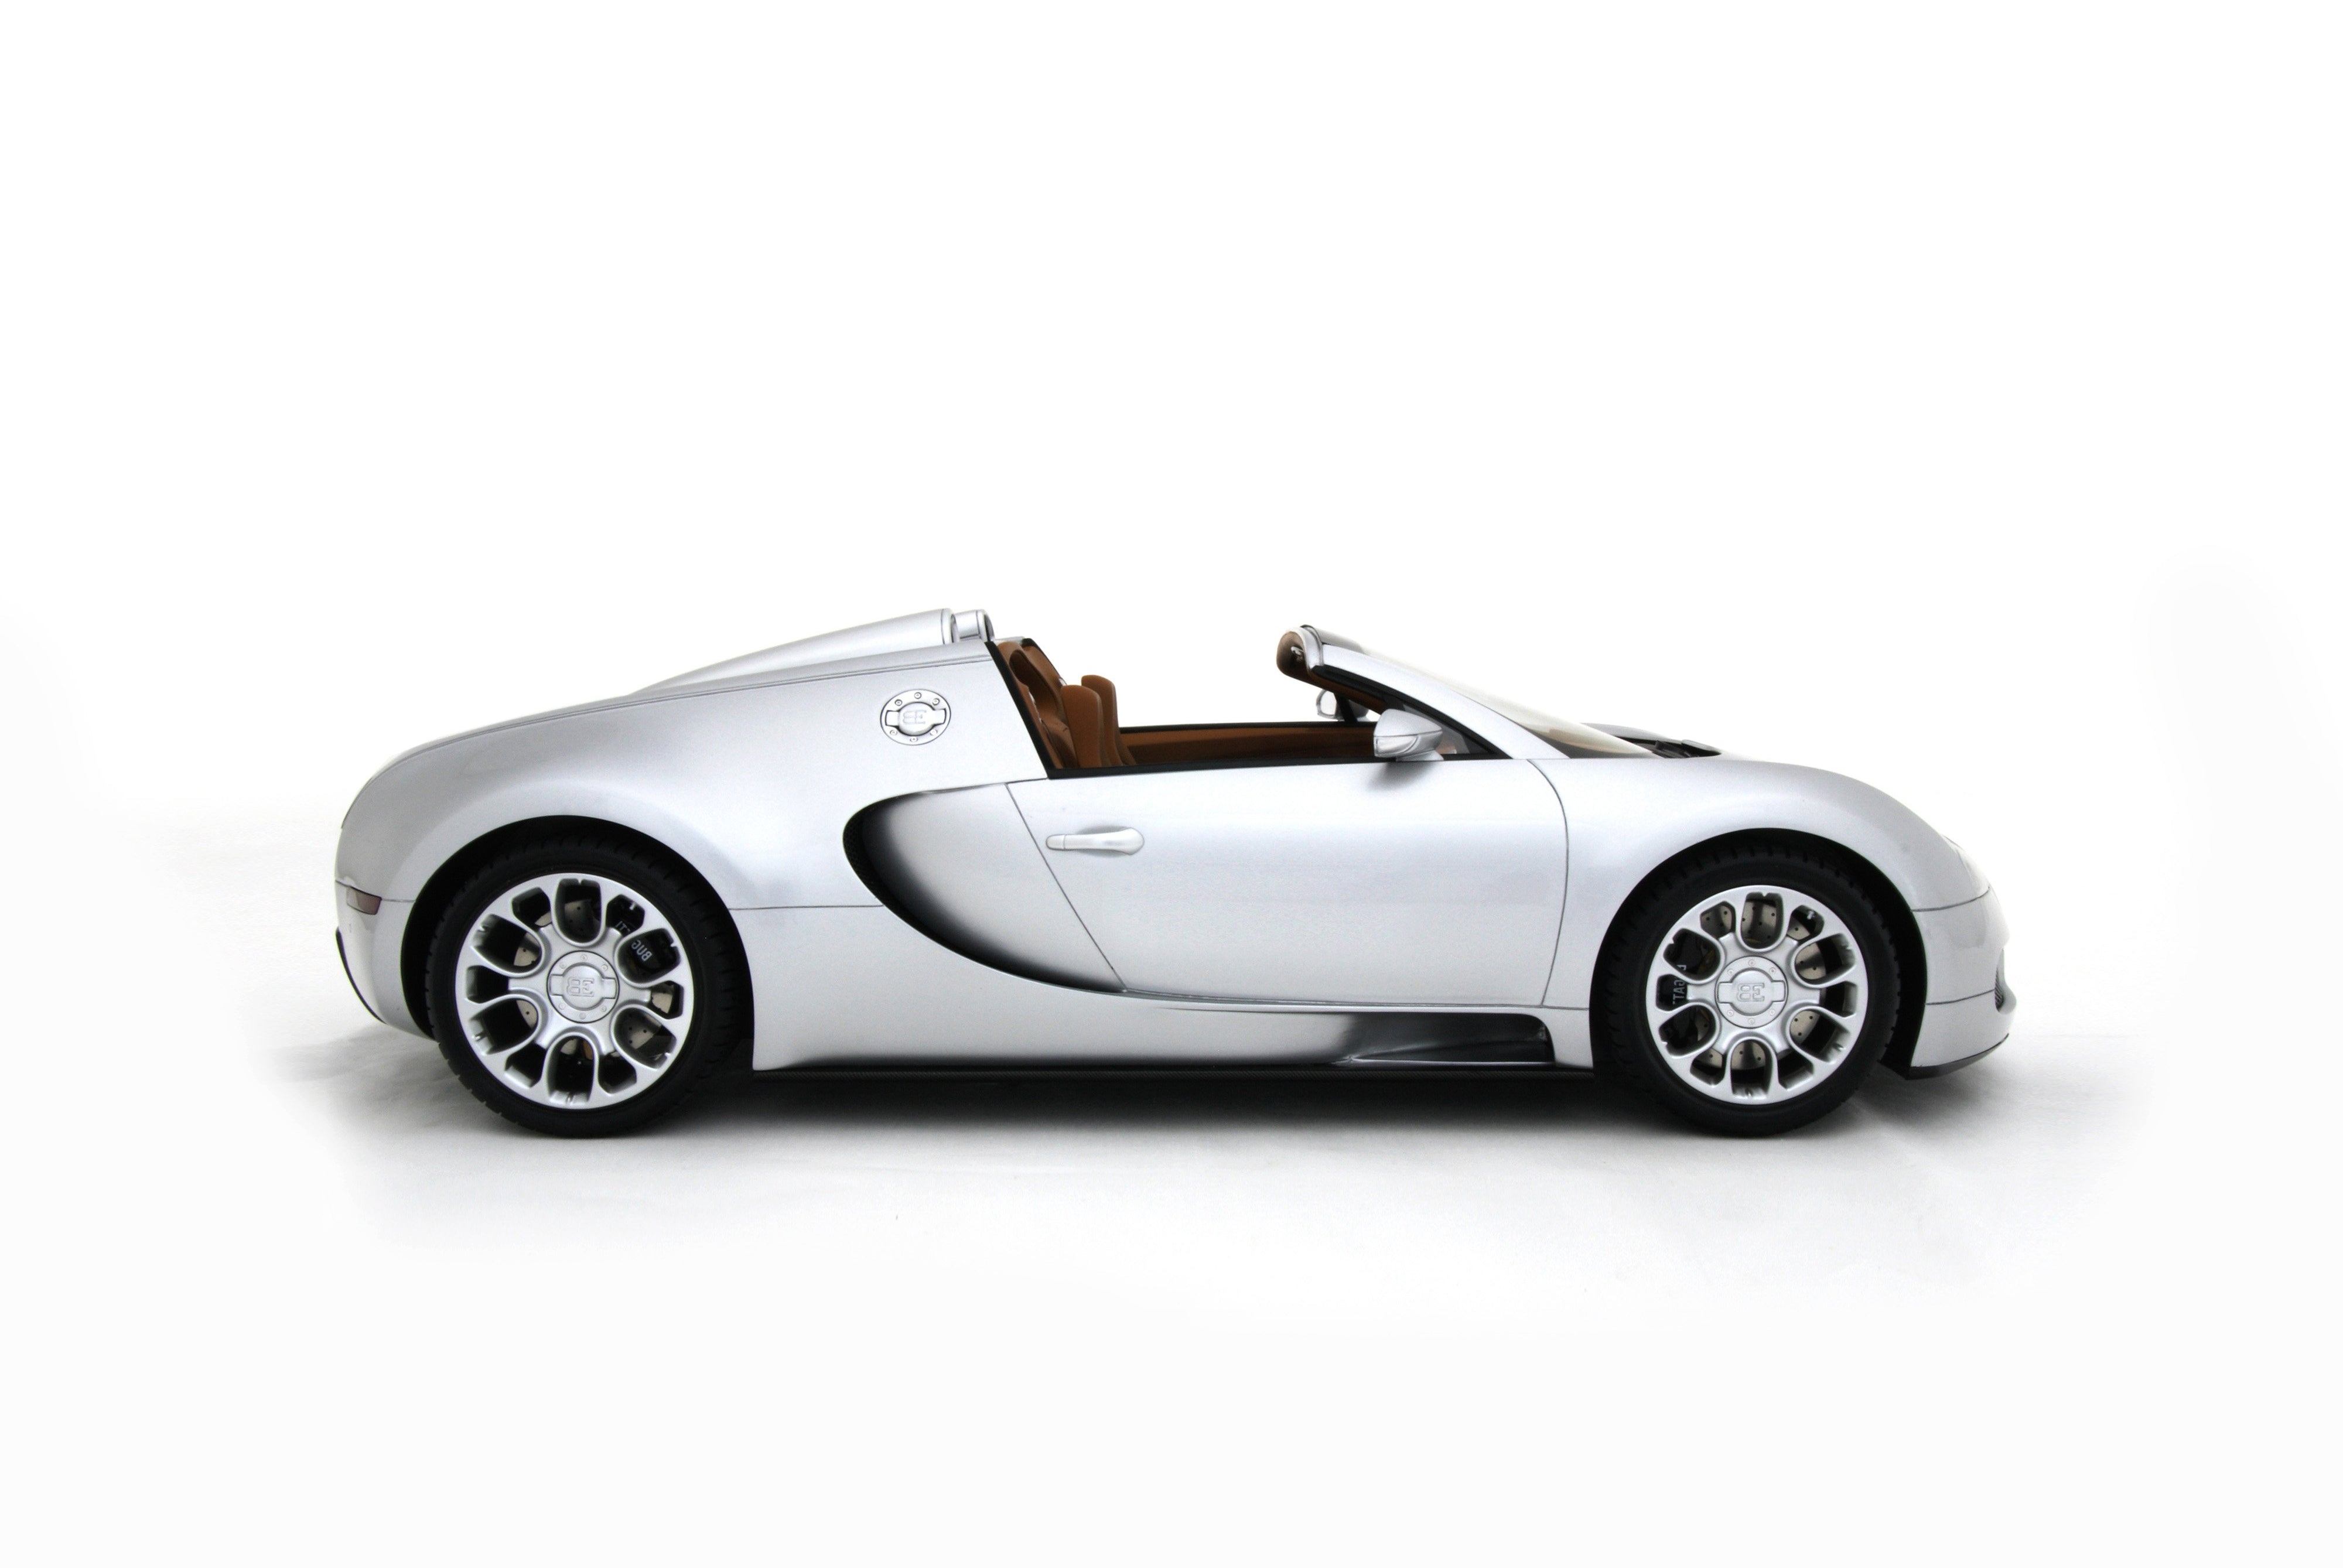 Buggati veyron 16.4 grand sportカタログセット超希少品箱付きカタログ